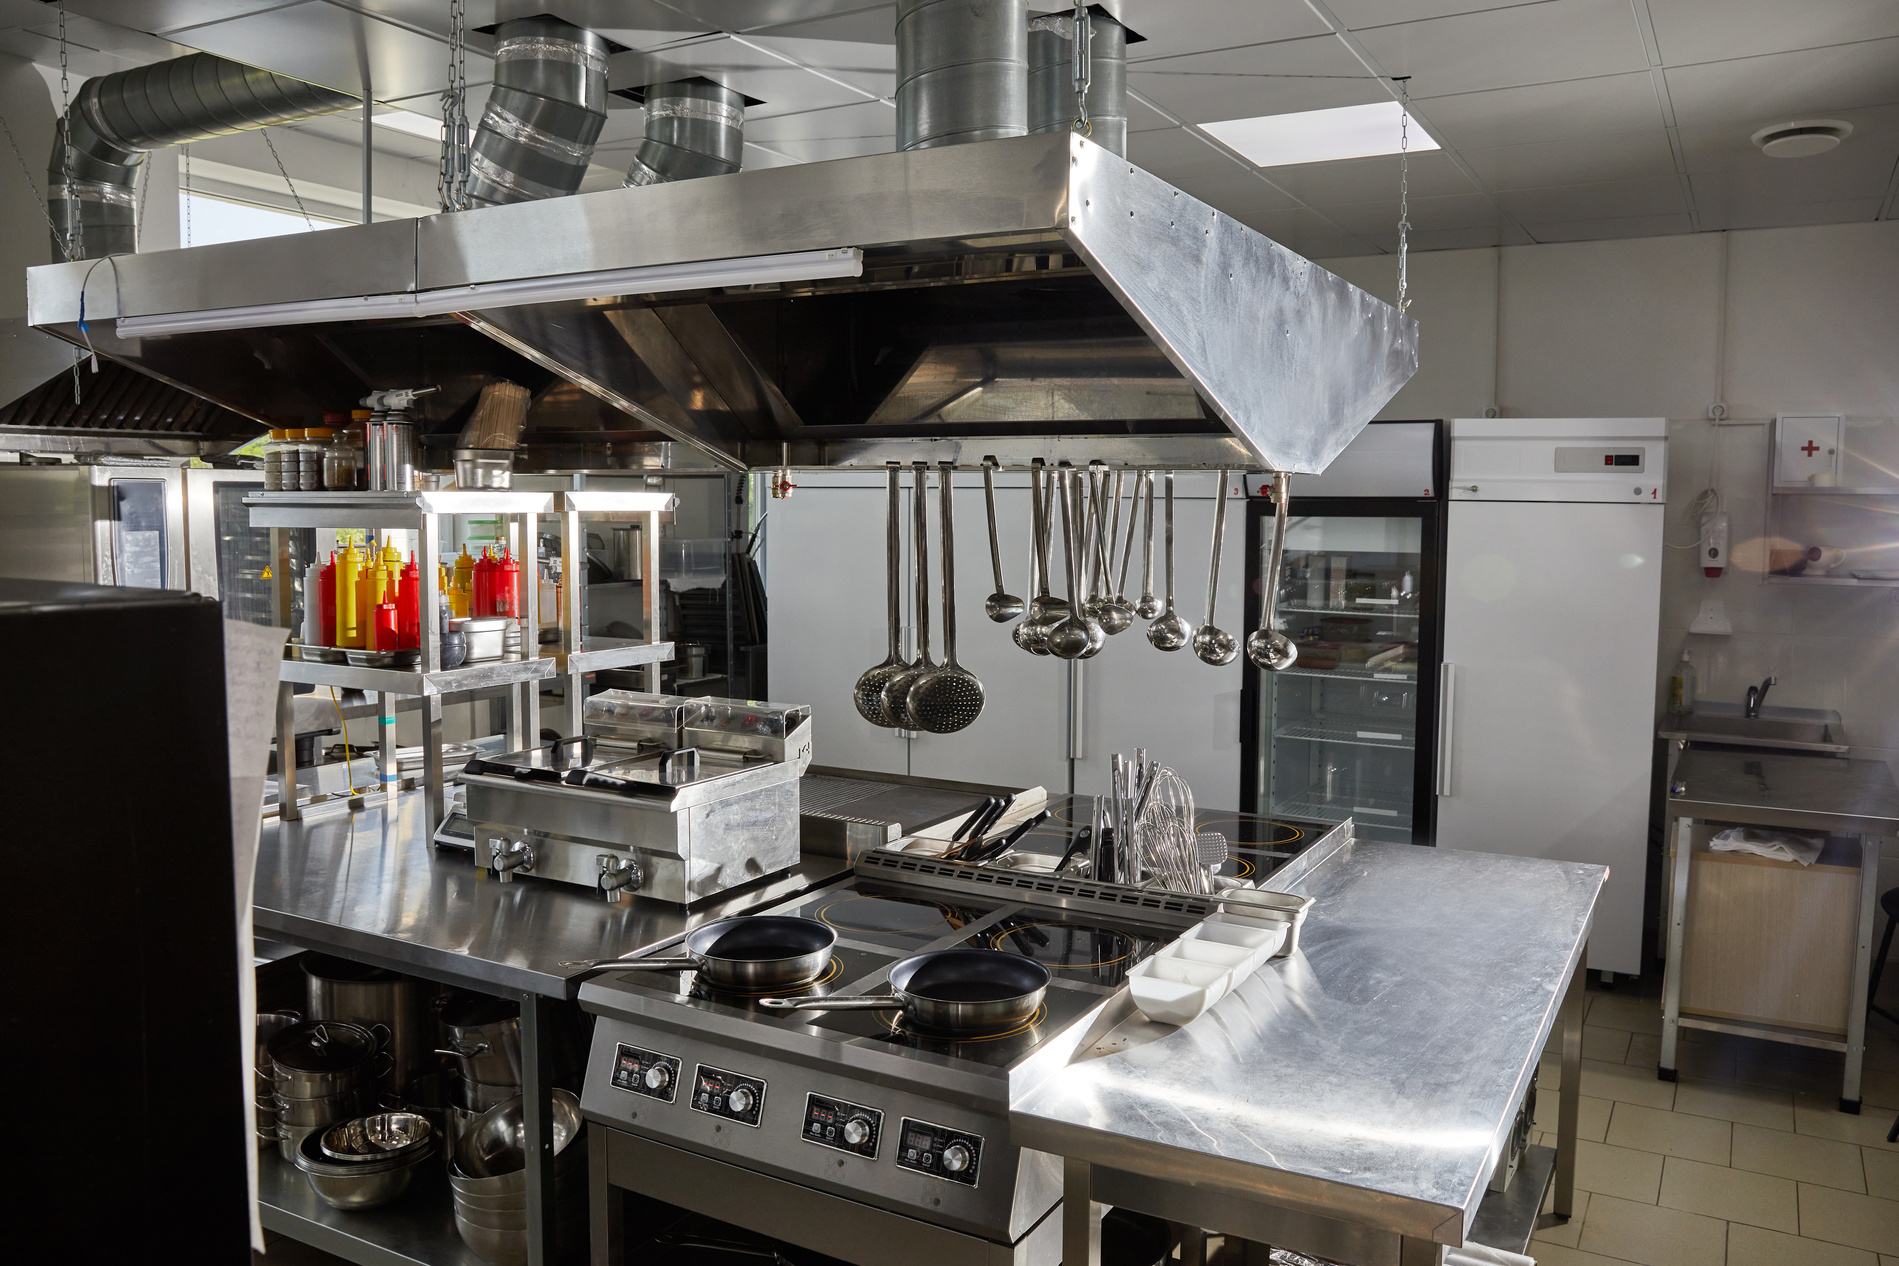 Professional Kitchen in Restaurant. Modern Equipment and Devices. Empty Kitchen